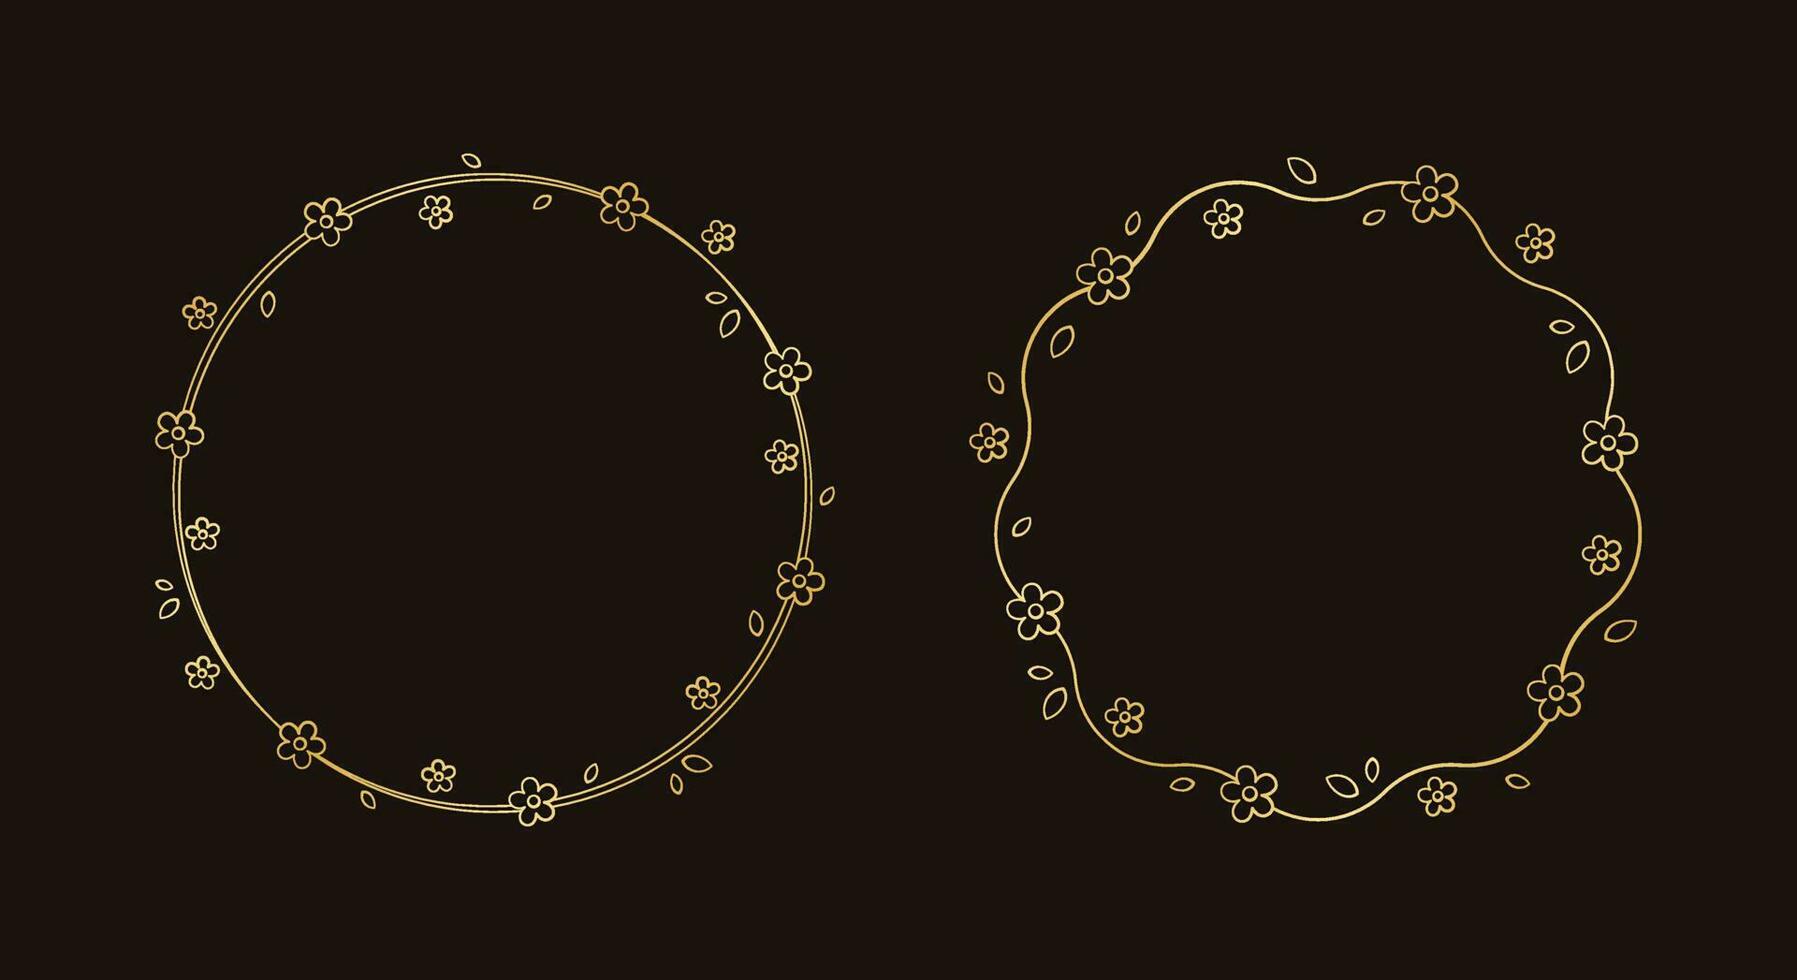 Gold Round Floral Frame Outline Doodle. Spring botanical circle border template, flourish design element for wedding, greeting card. vector